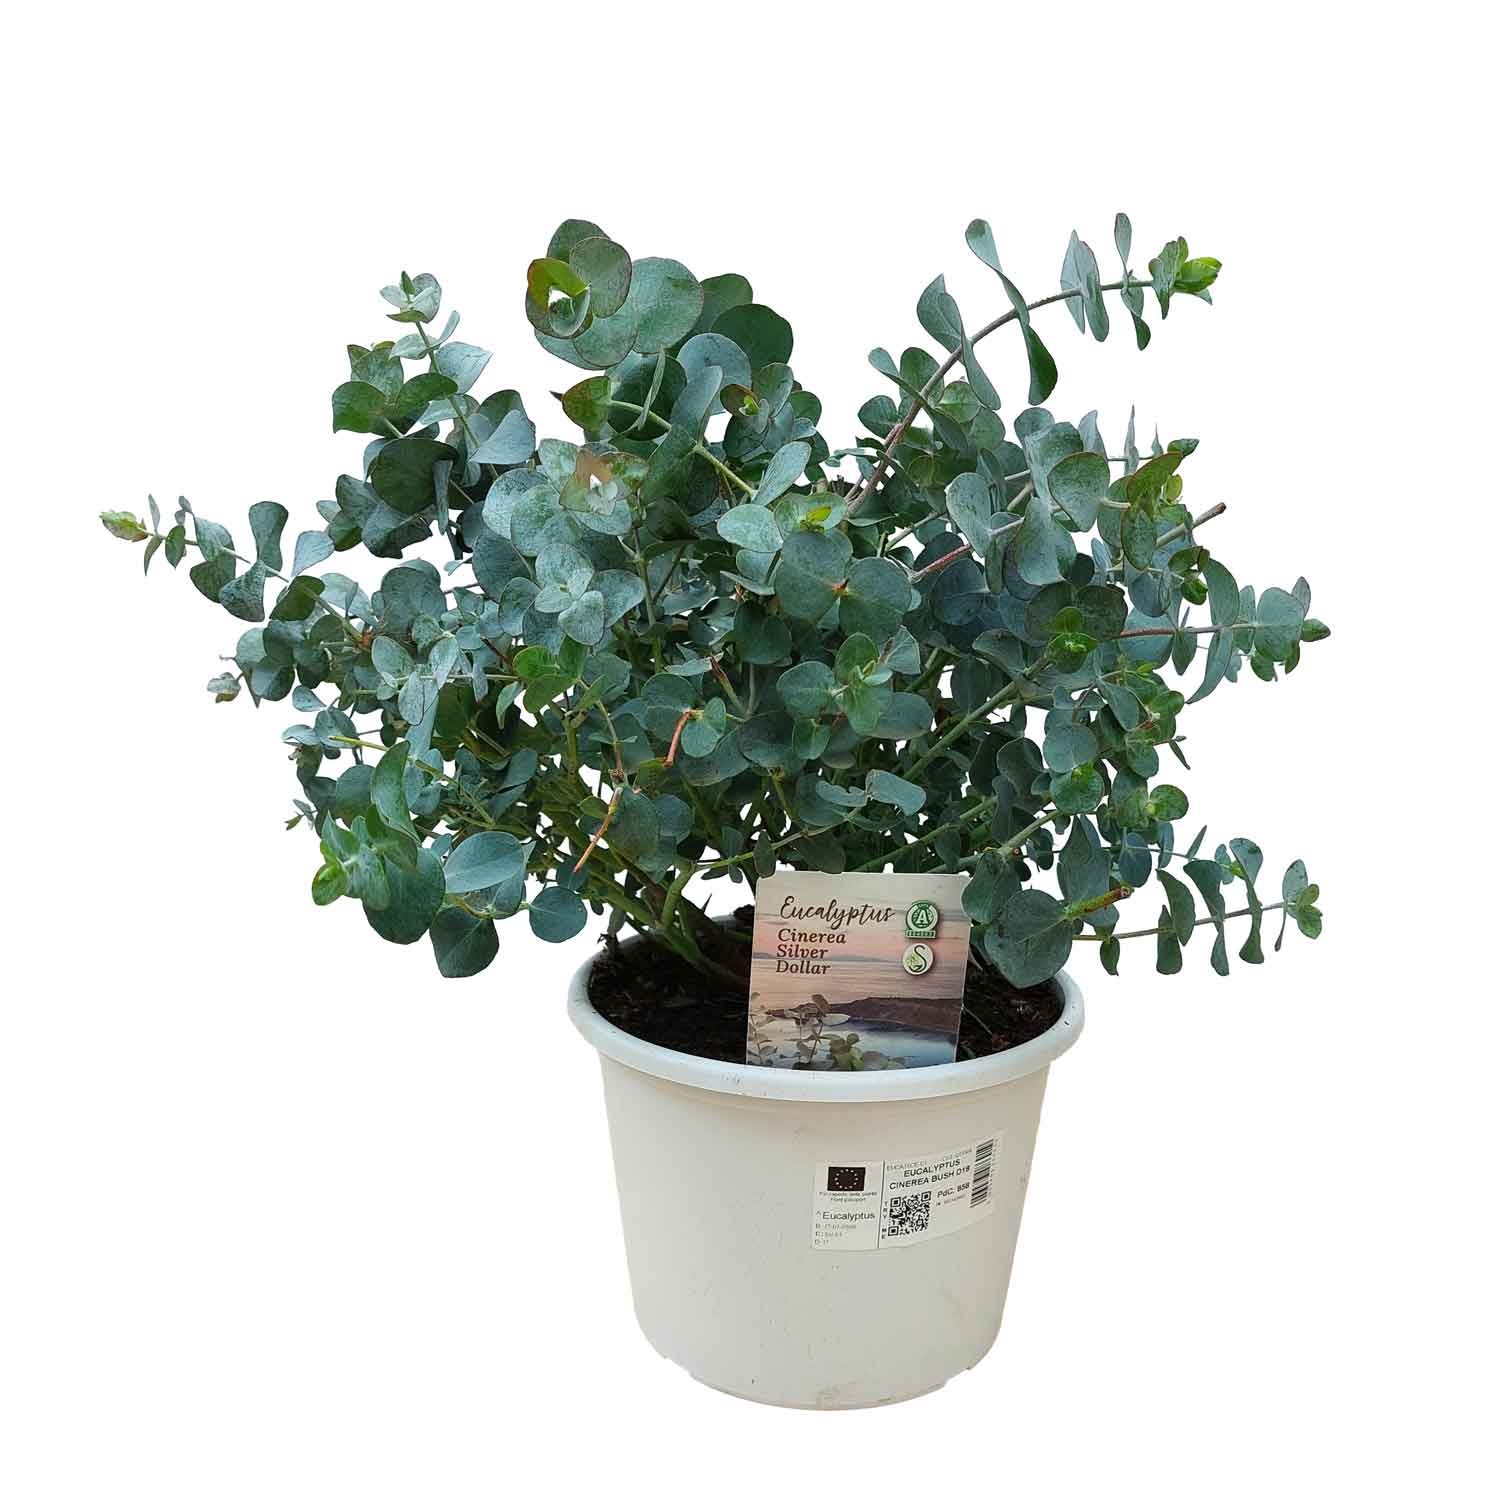 Eucalyptus cinerea Silver Dollar 18cm